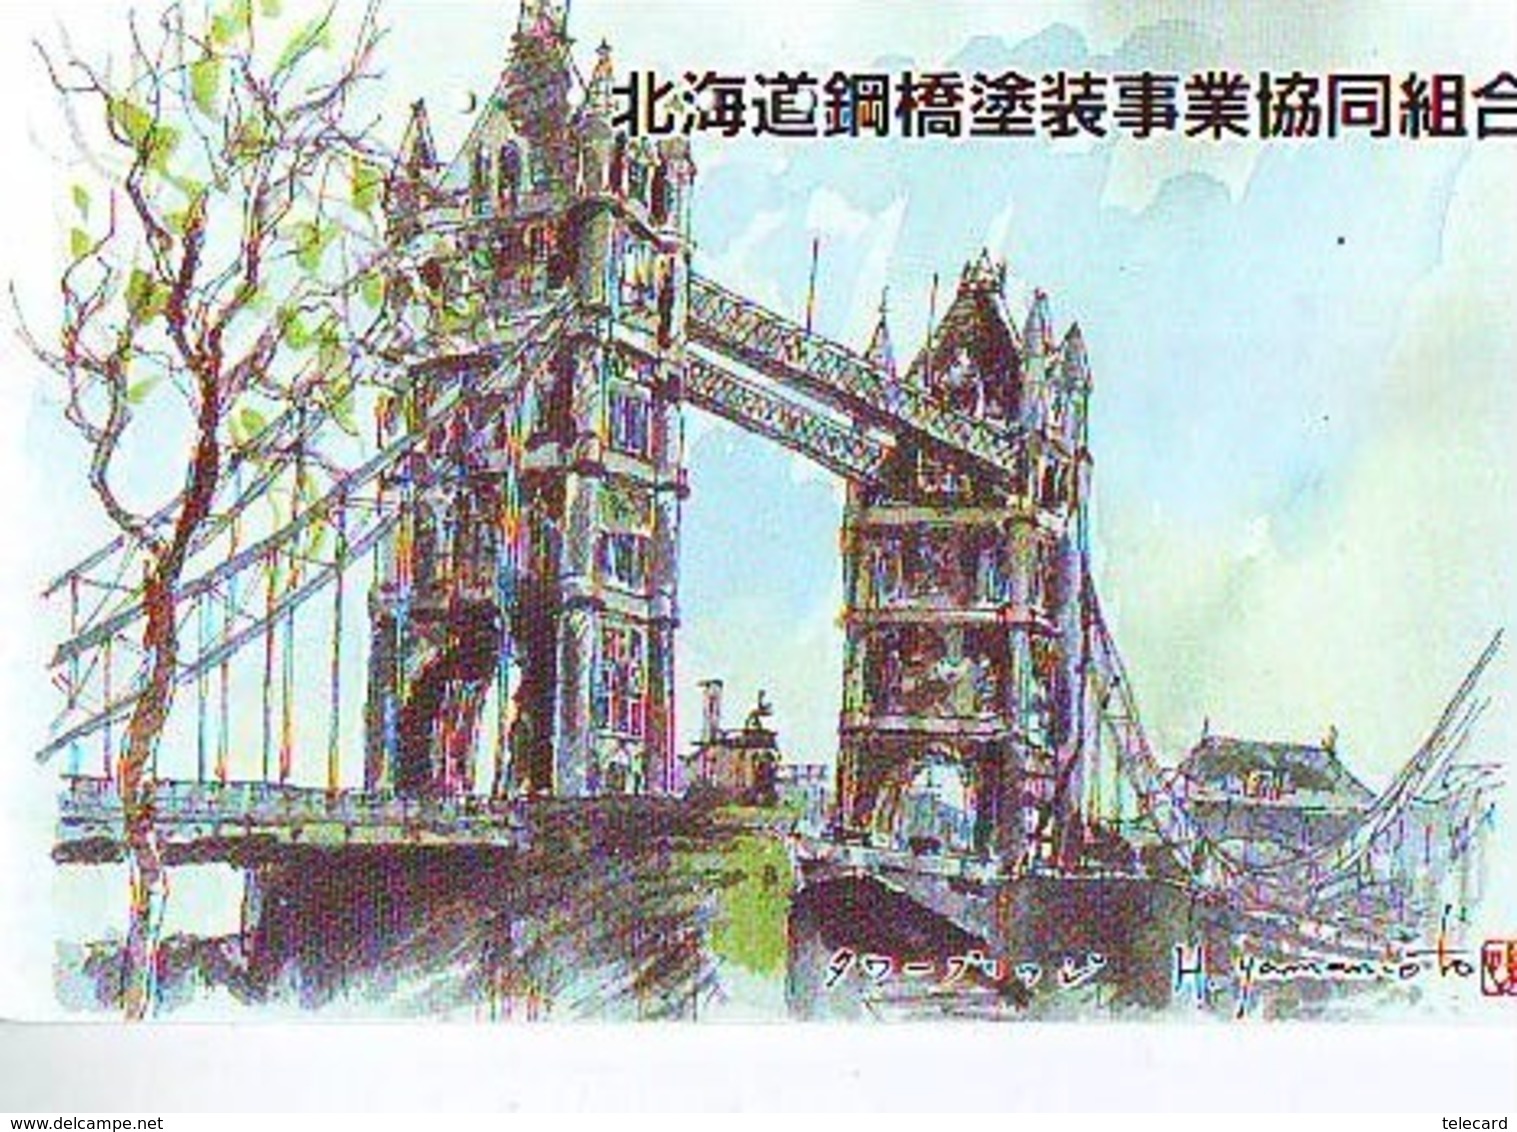 Télécarte Japon ANGLETERRE (304) GREAT BRITAIN Related * ENGLAND Phonecard Japan * TOWER BRIDGE * LONDON - Landscapes